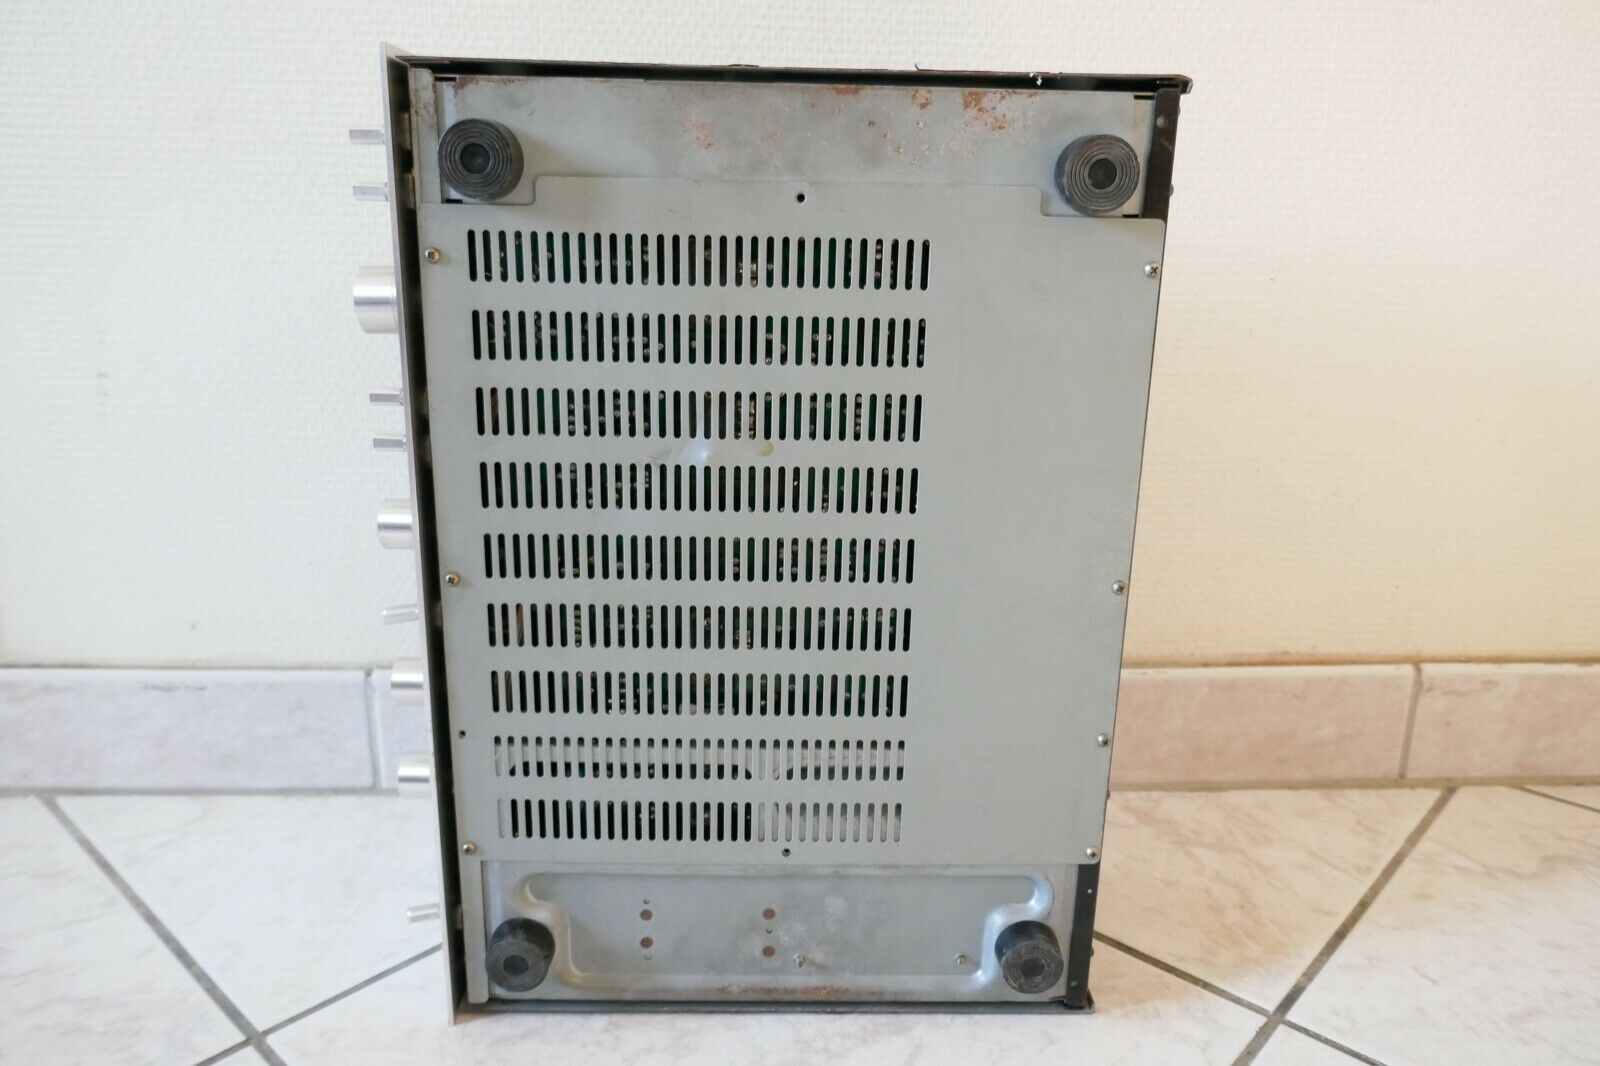 amplificateur amplifier pioneer sa-708 vintage occasion